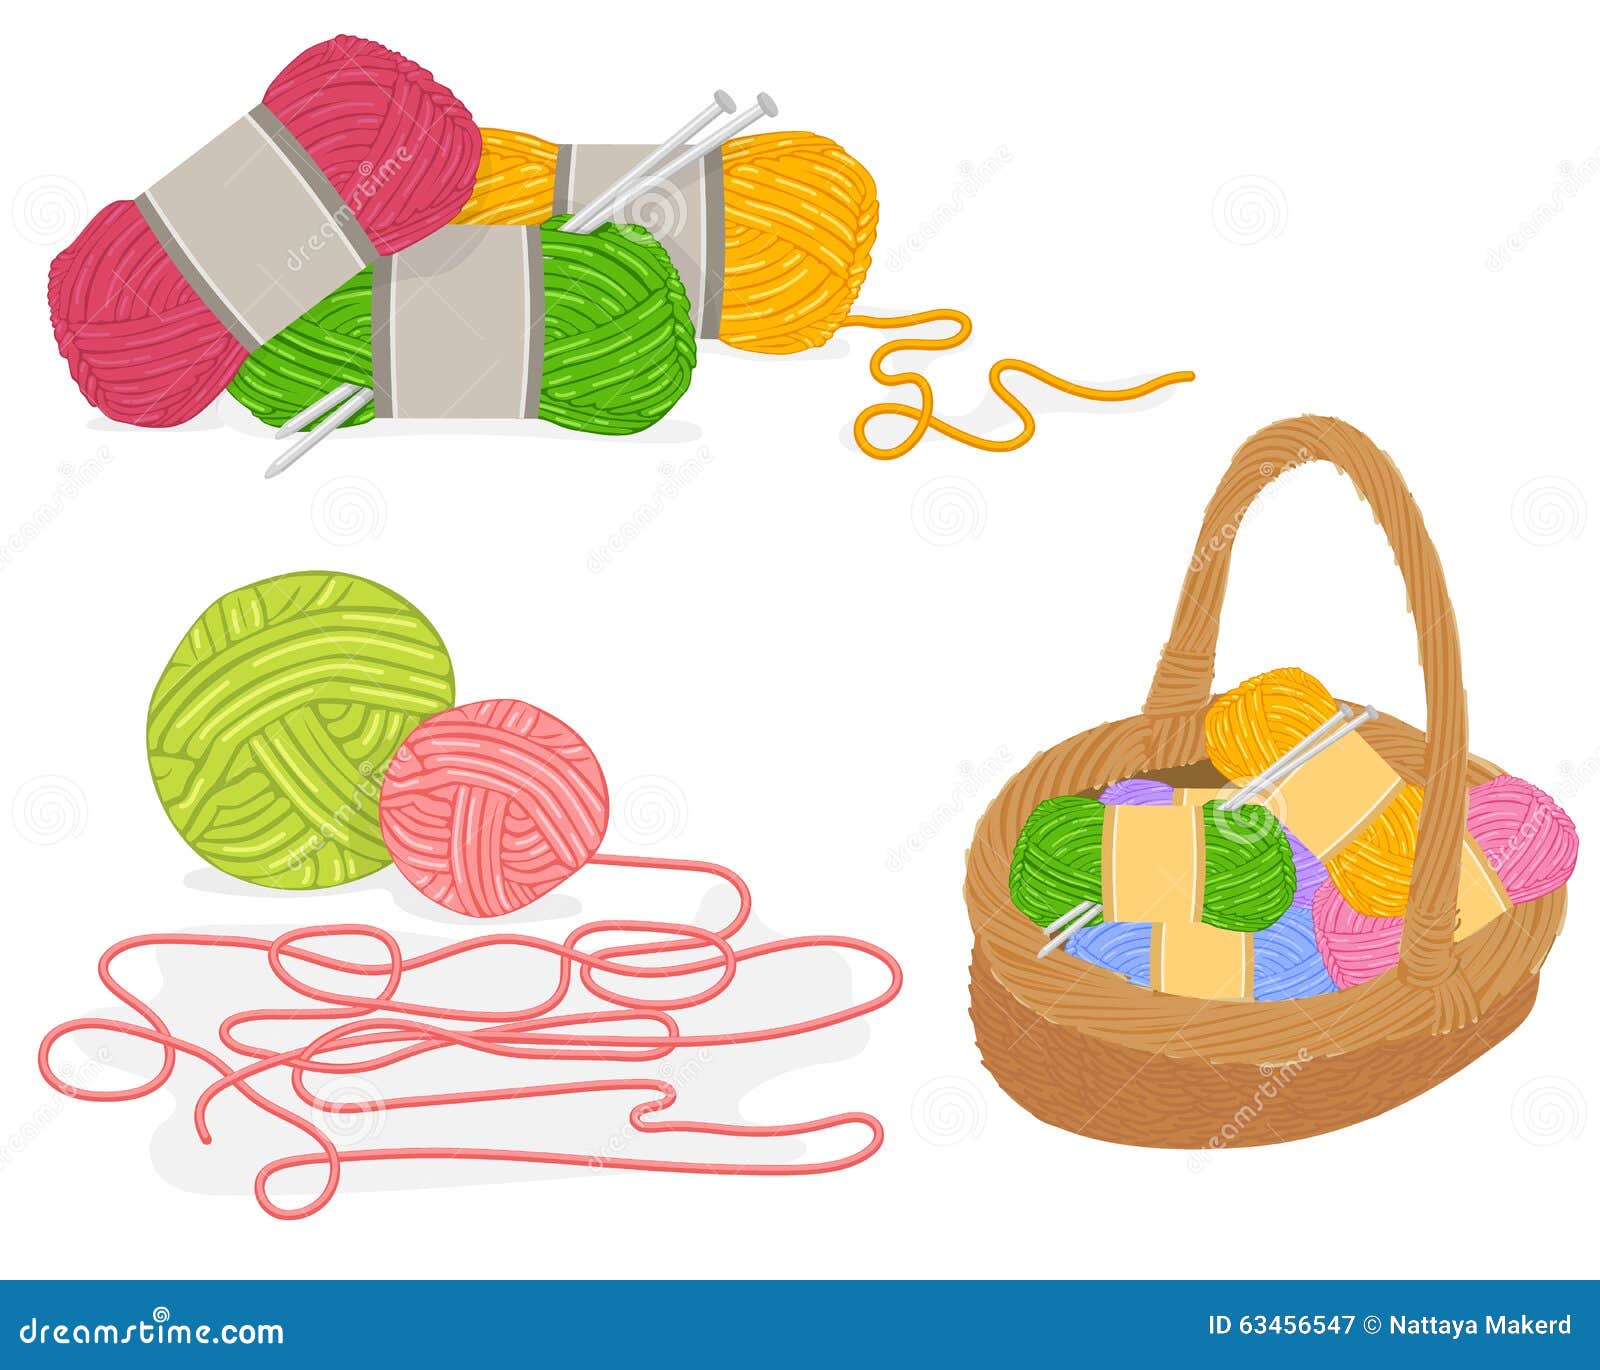 Vector of a Wicker Basket Full of Knitting Materials Stock Vector ...